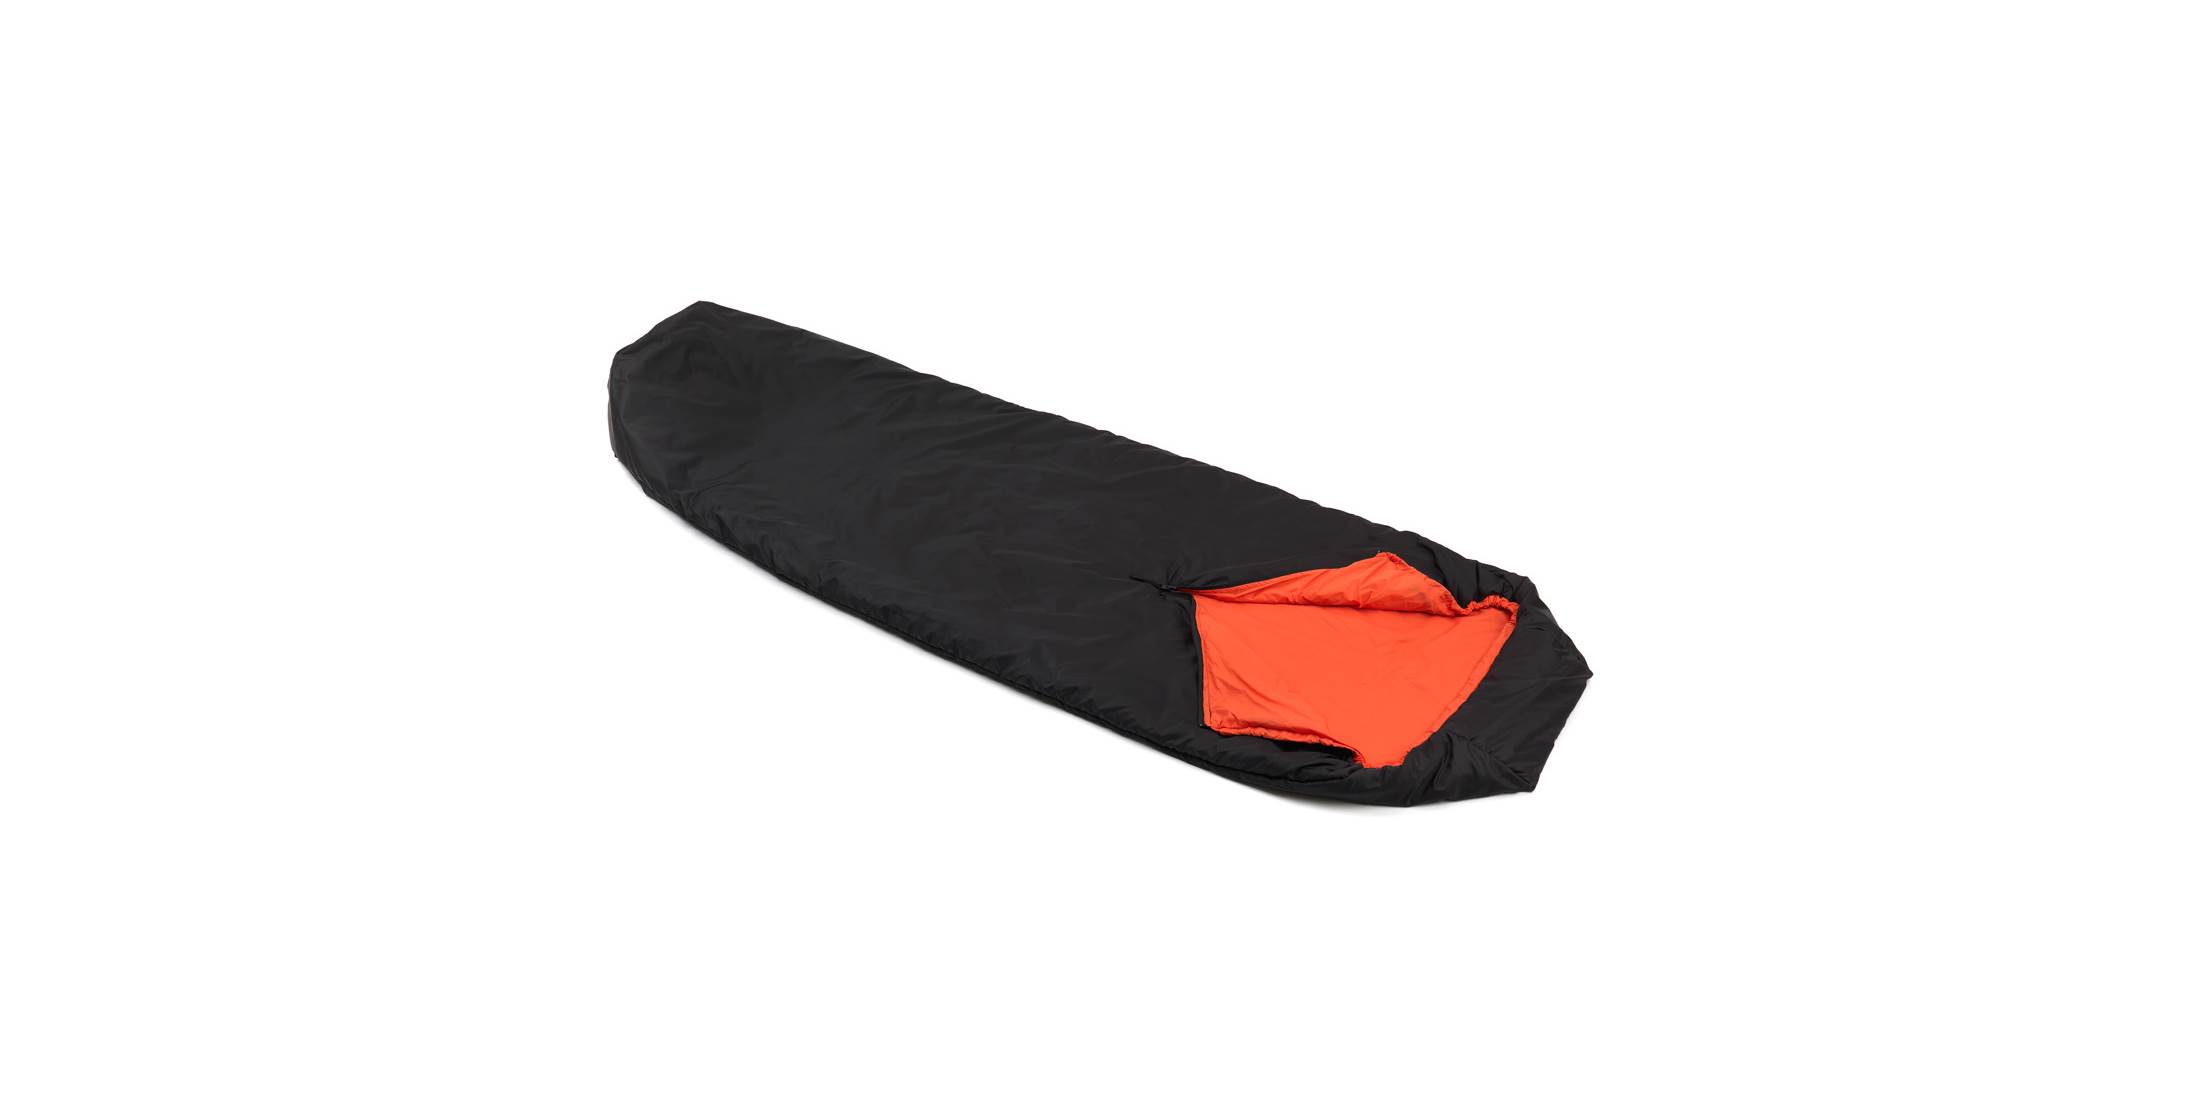 Snugpak Venture Adventure Racing Insulated Softie Sleeping Bag OutdoorGB